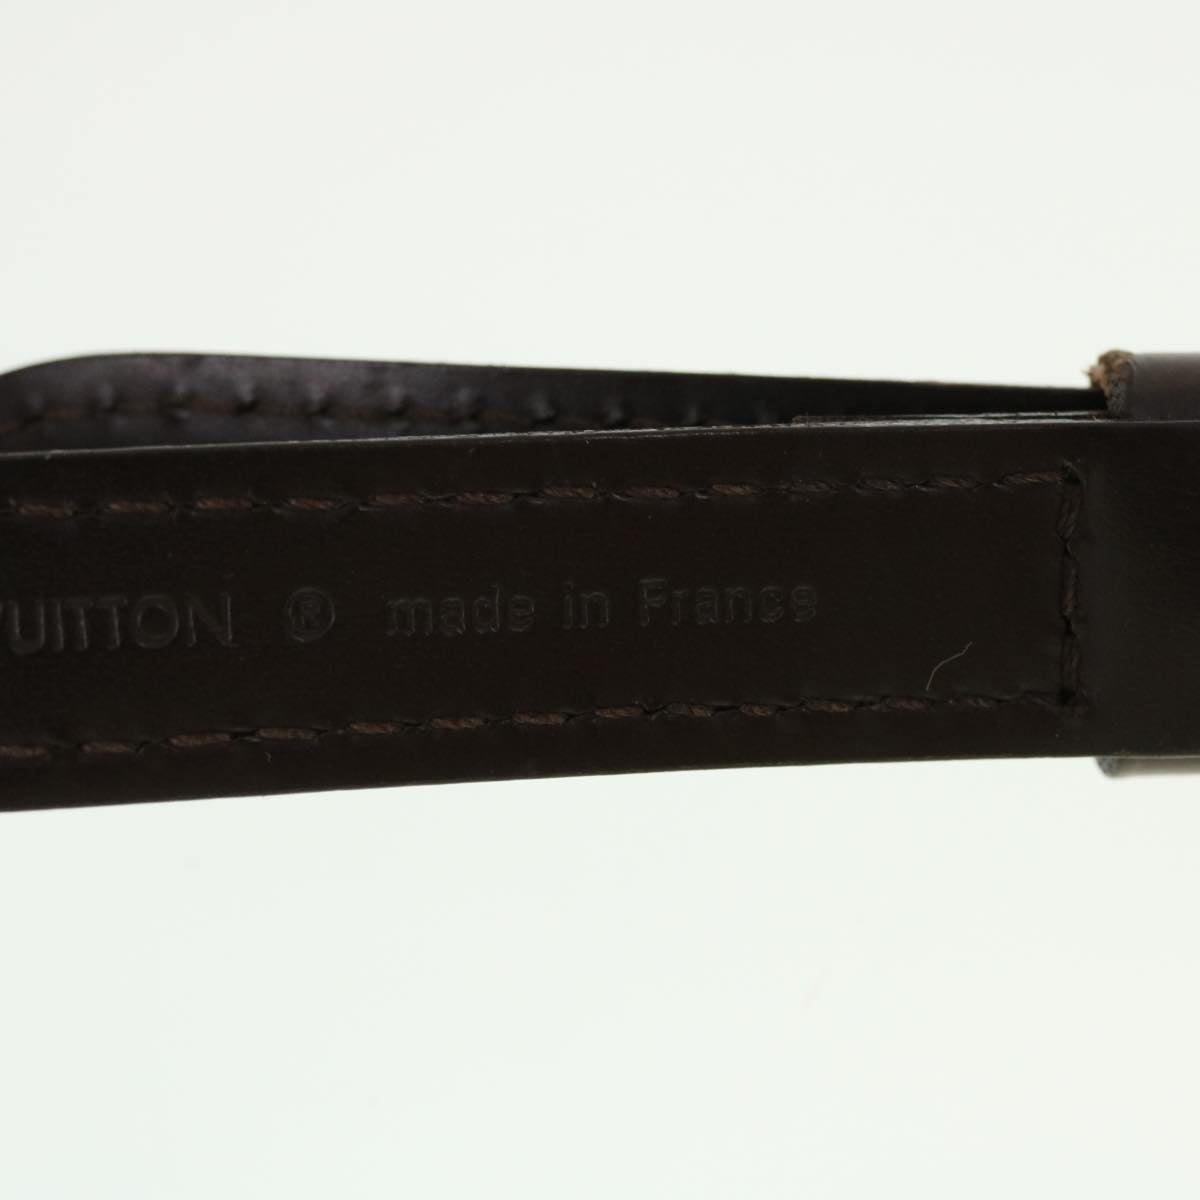 LOUIS VUITTON Damier Ebene Shoulder Strap Leather 37.4""-44.5"" Brown LV 43721